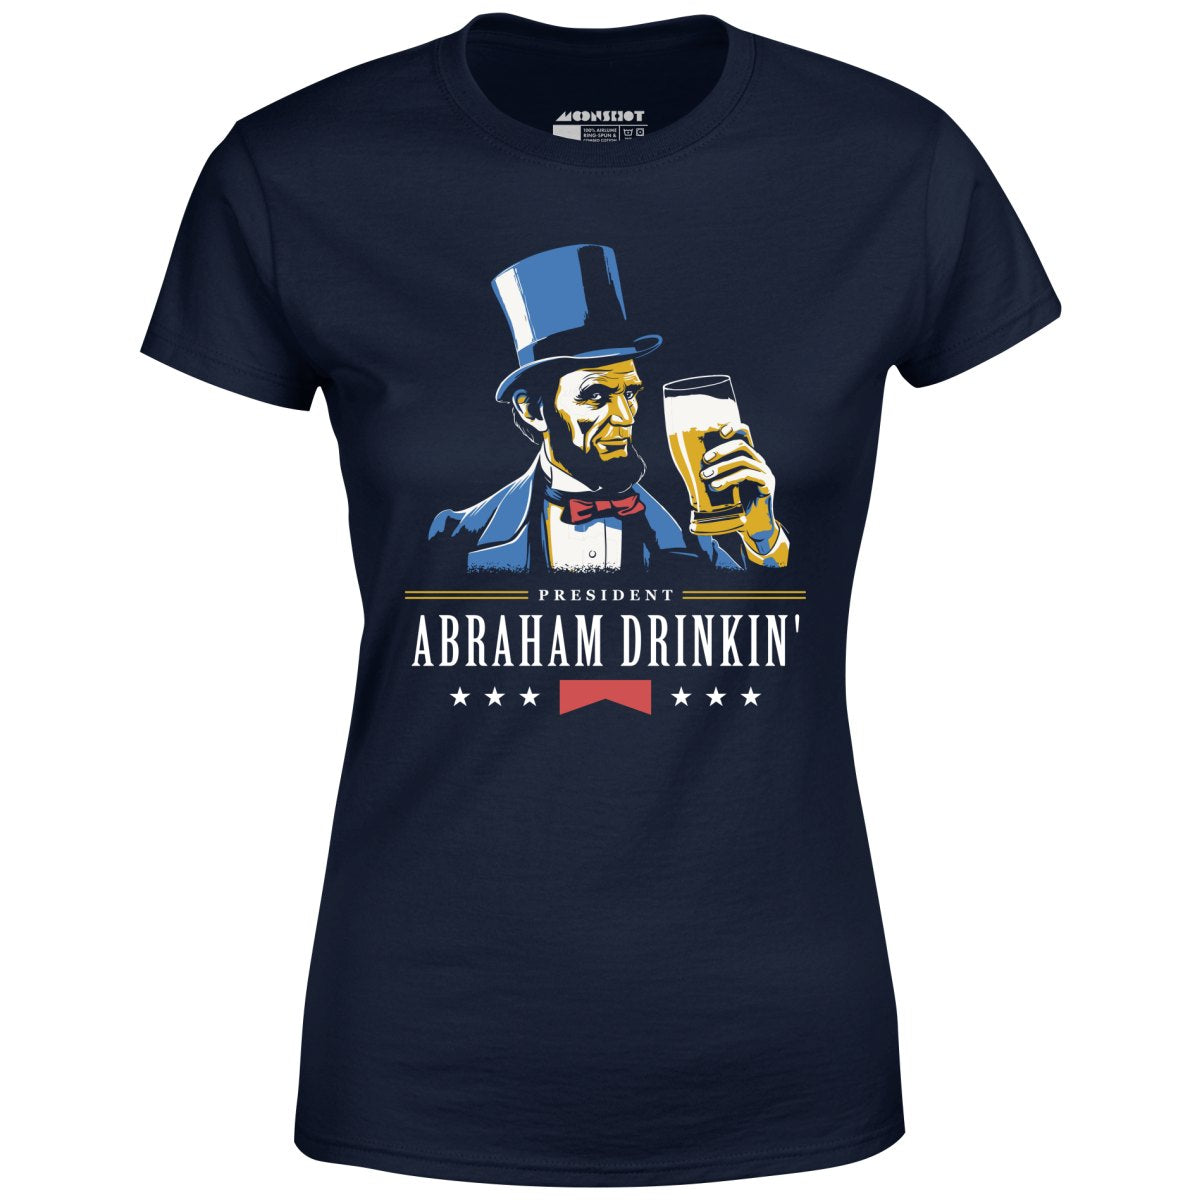 President Abraham Drinkin' - Women's T-Shirt